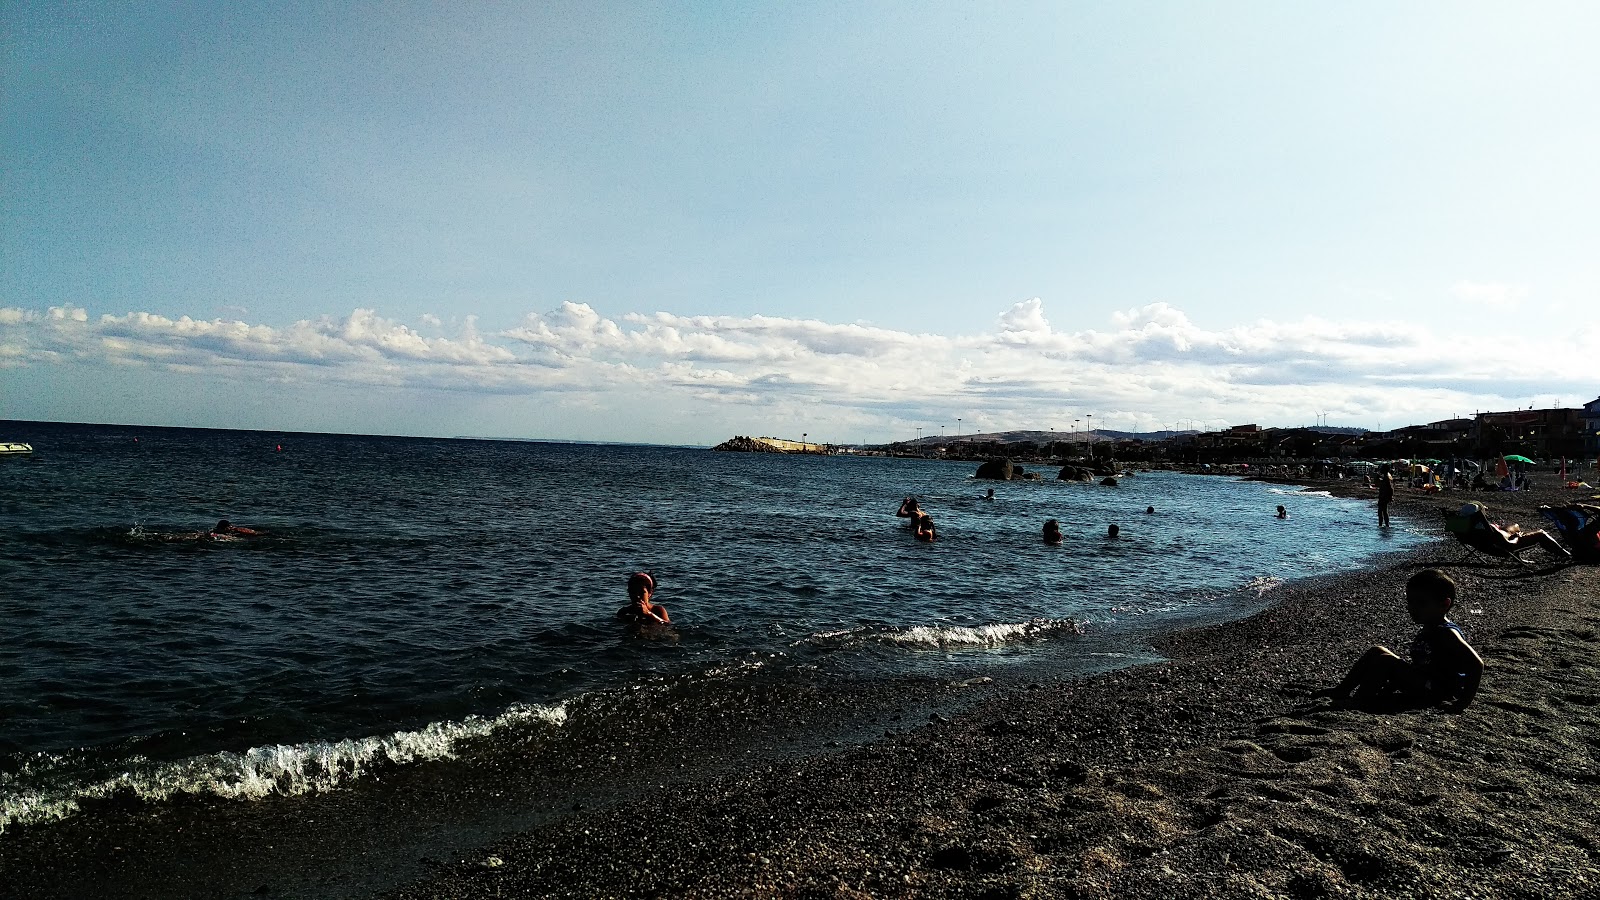 Fotografie cu Ciro' Marina beach cu nivelul de curățenie in medie